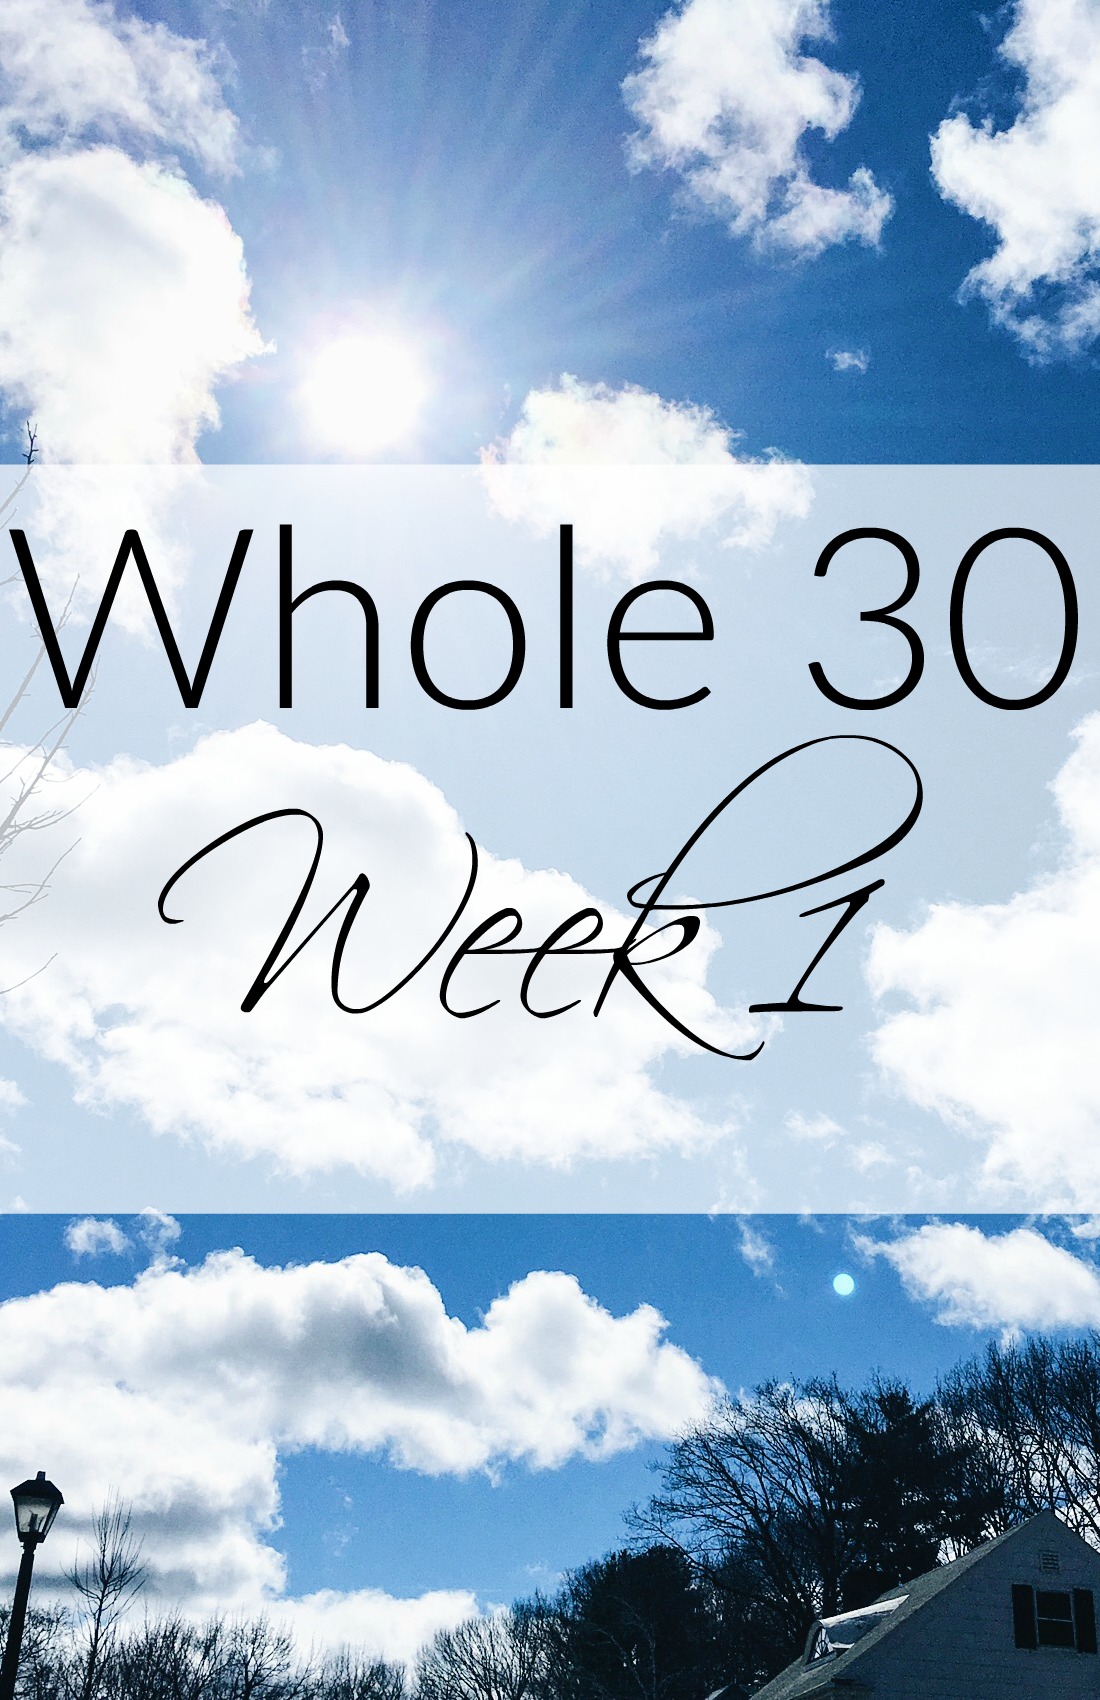 Whole30 Week 1